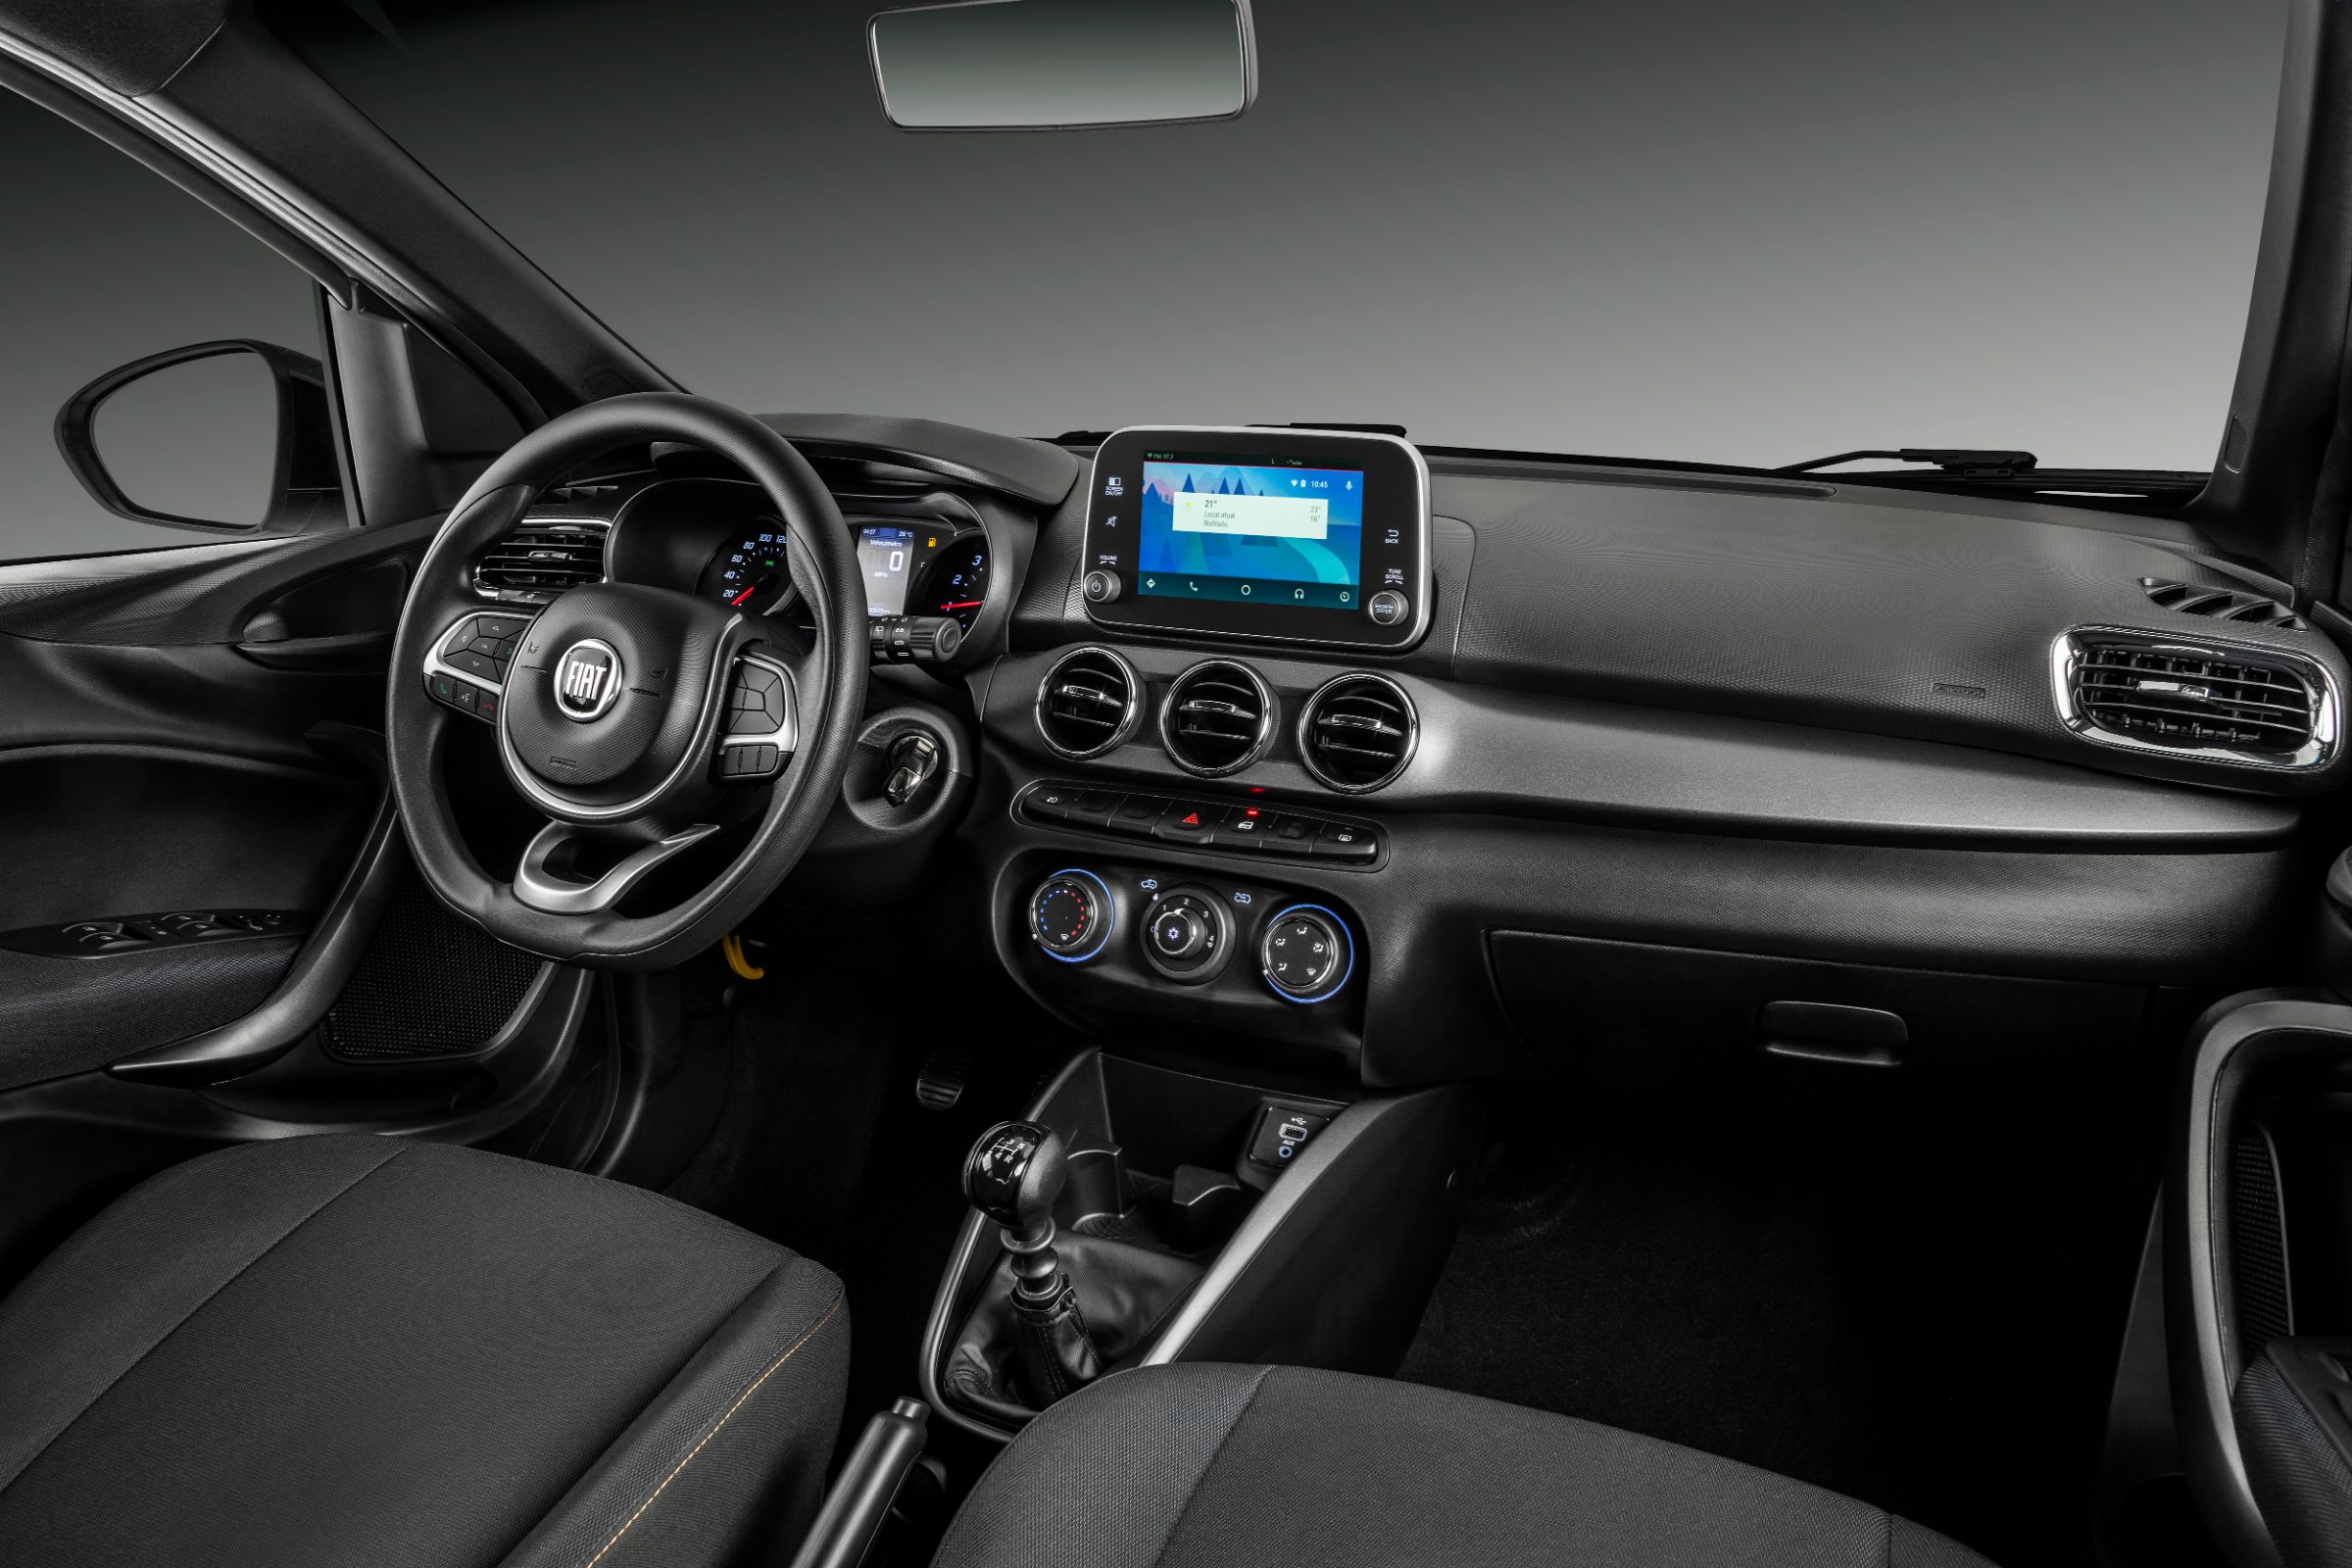 Fiat Argo Trekking: interior com detalhes exclusivos